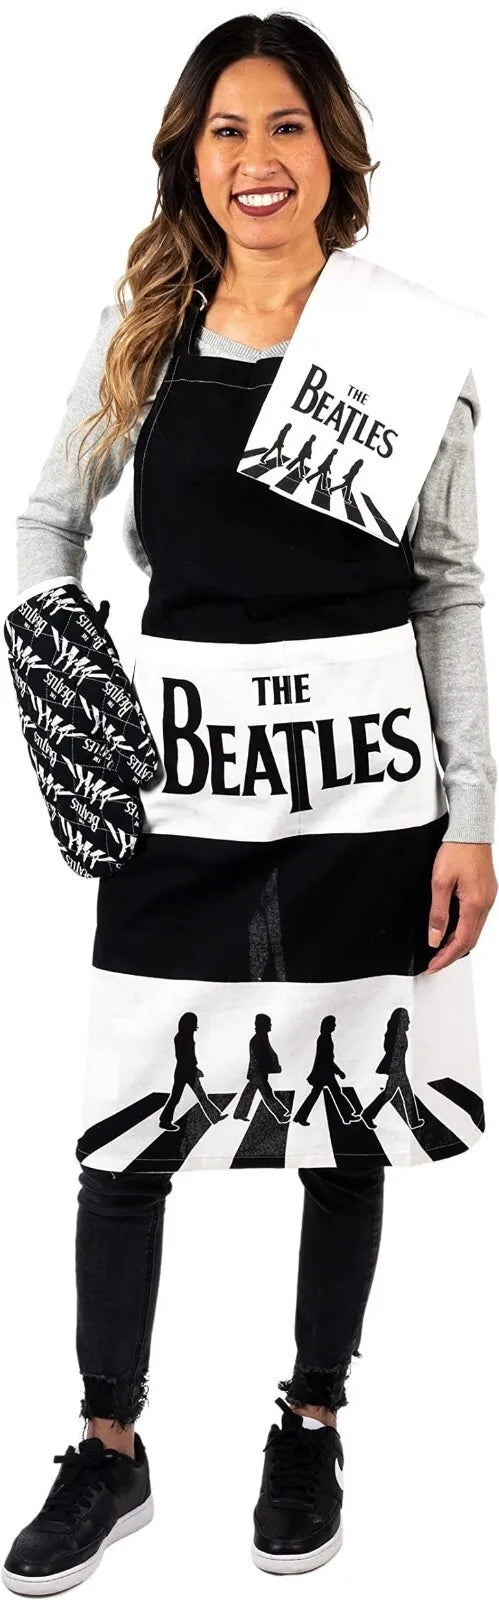 The Beatles Abbey Road Kitchen Textile 3pc Gift Set: Apron, Oven Mitt & Towel Bundle